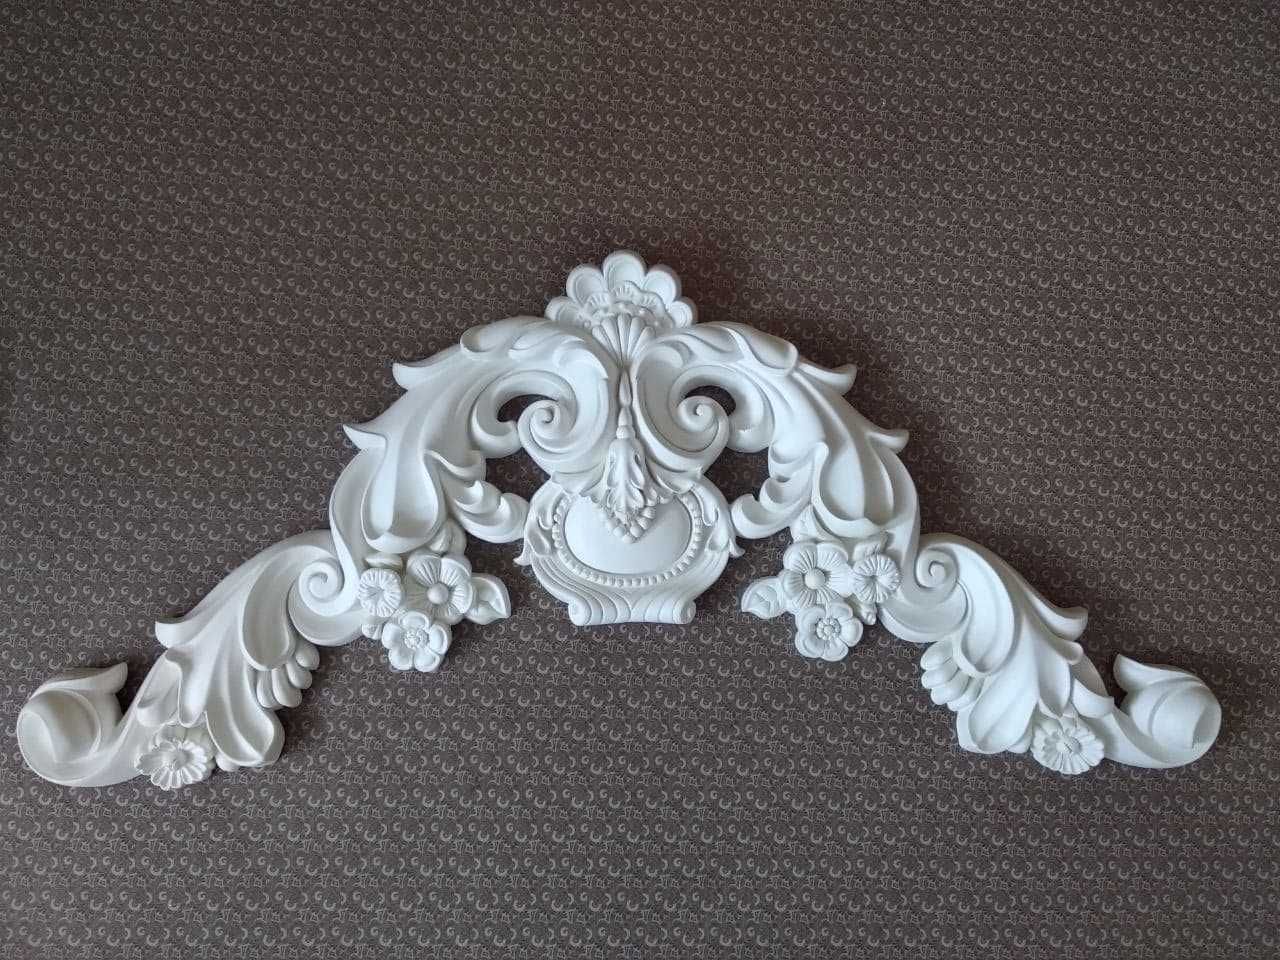 Декоративное украшение из полиуретана,производство Италия